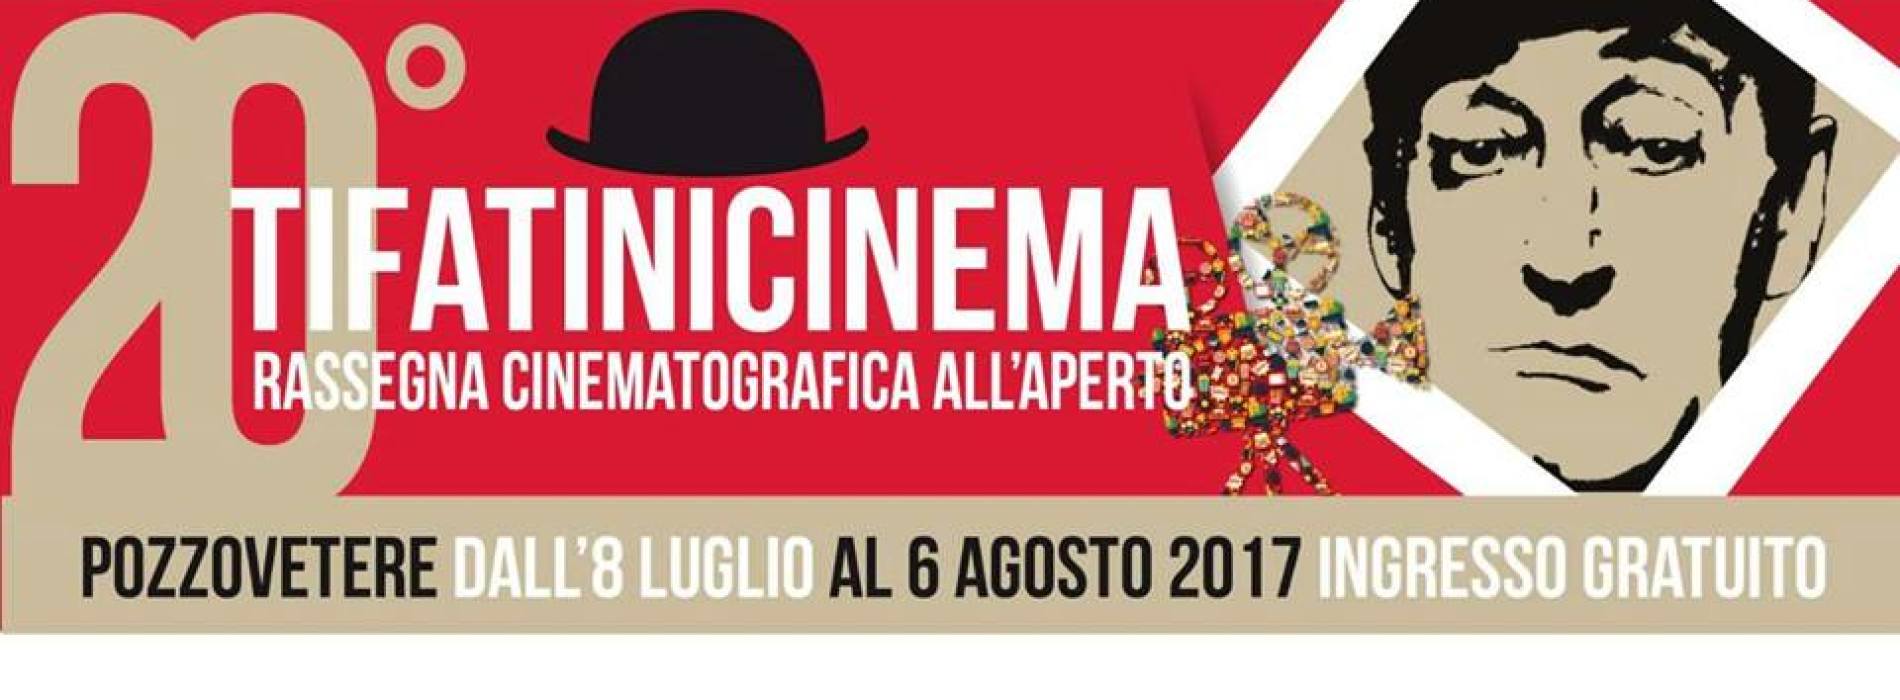 Tifatini Cinema, in estate a Caserta i film si vedono in collina